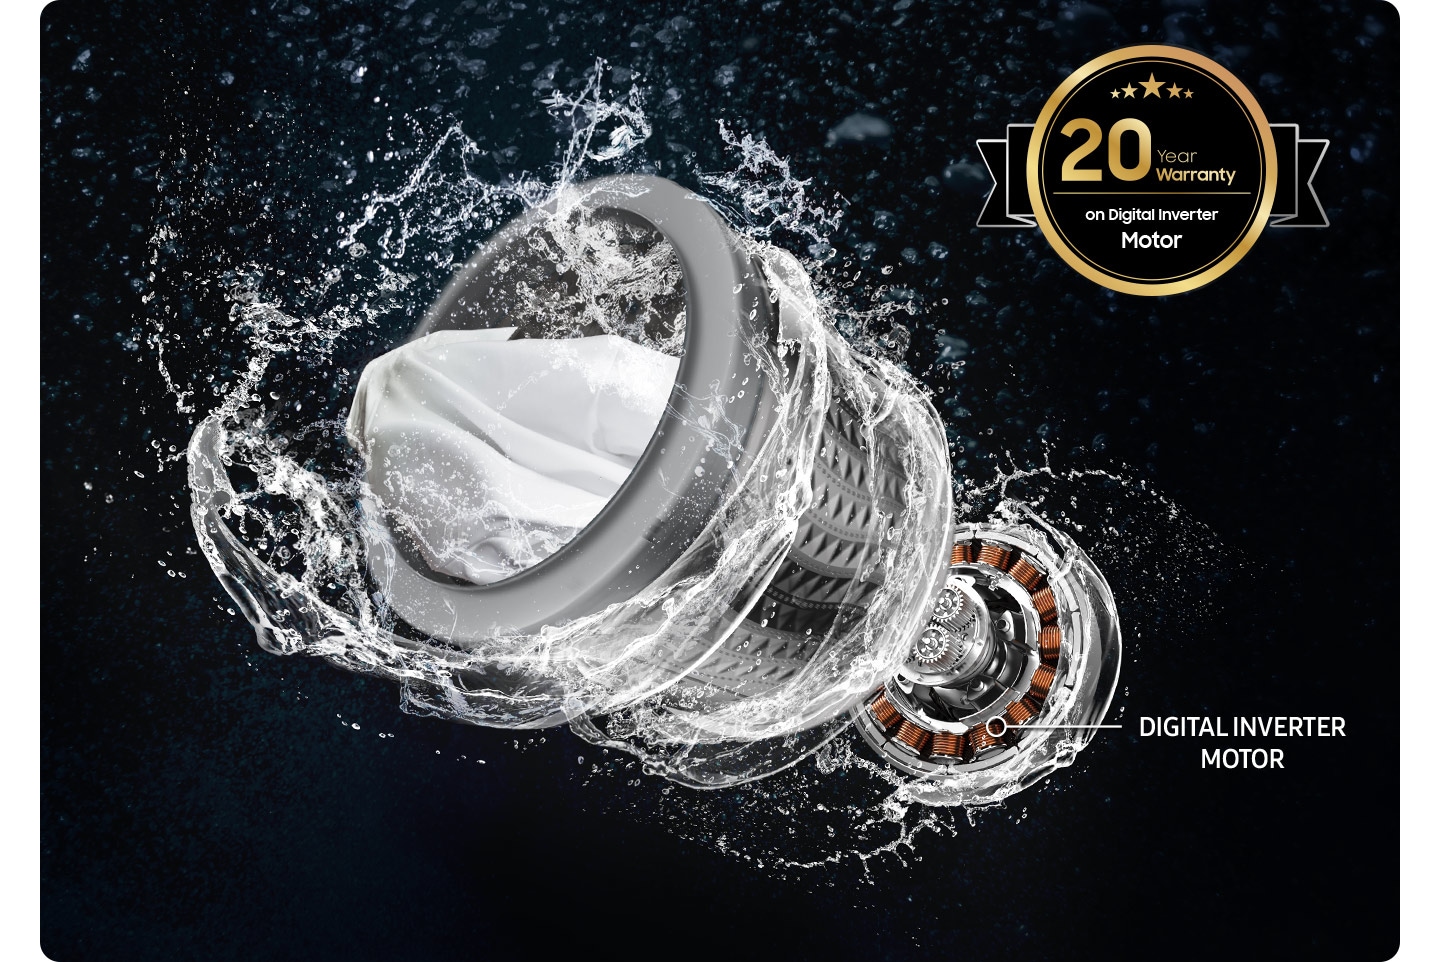 Digital Inverter Motor, drum and water stream spins fast. WA4000C’s warranty is 20 year.